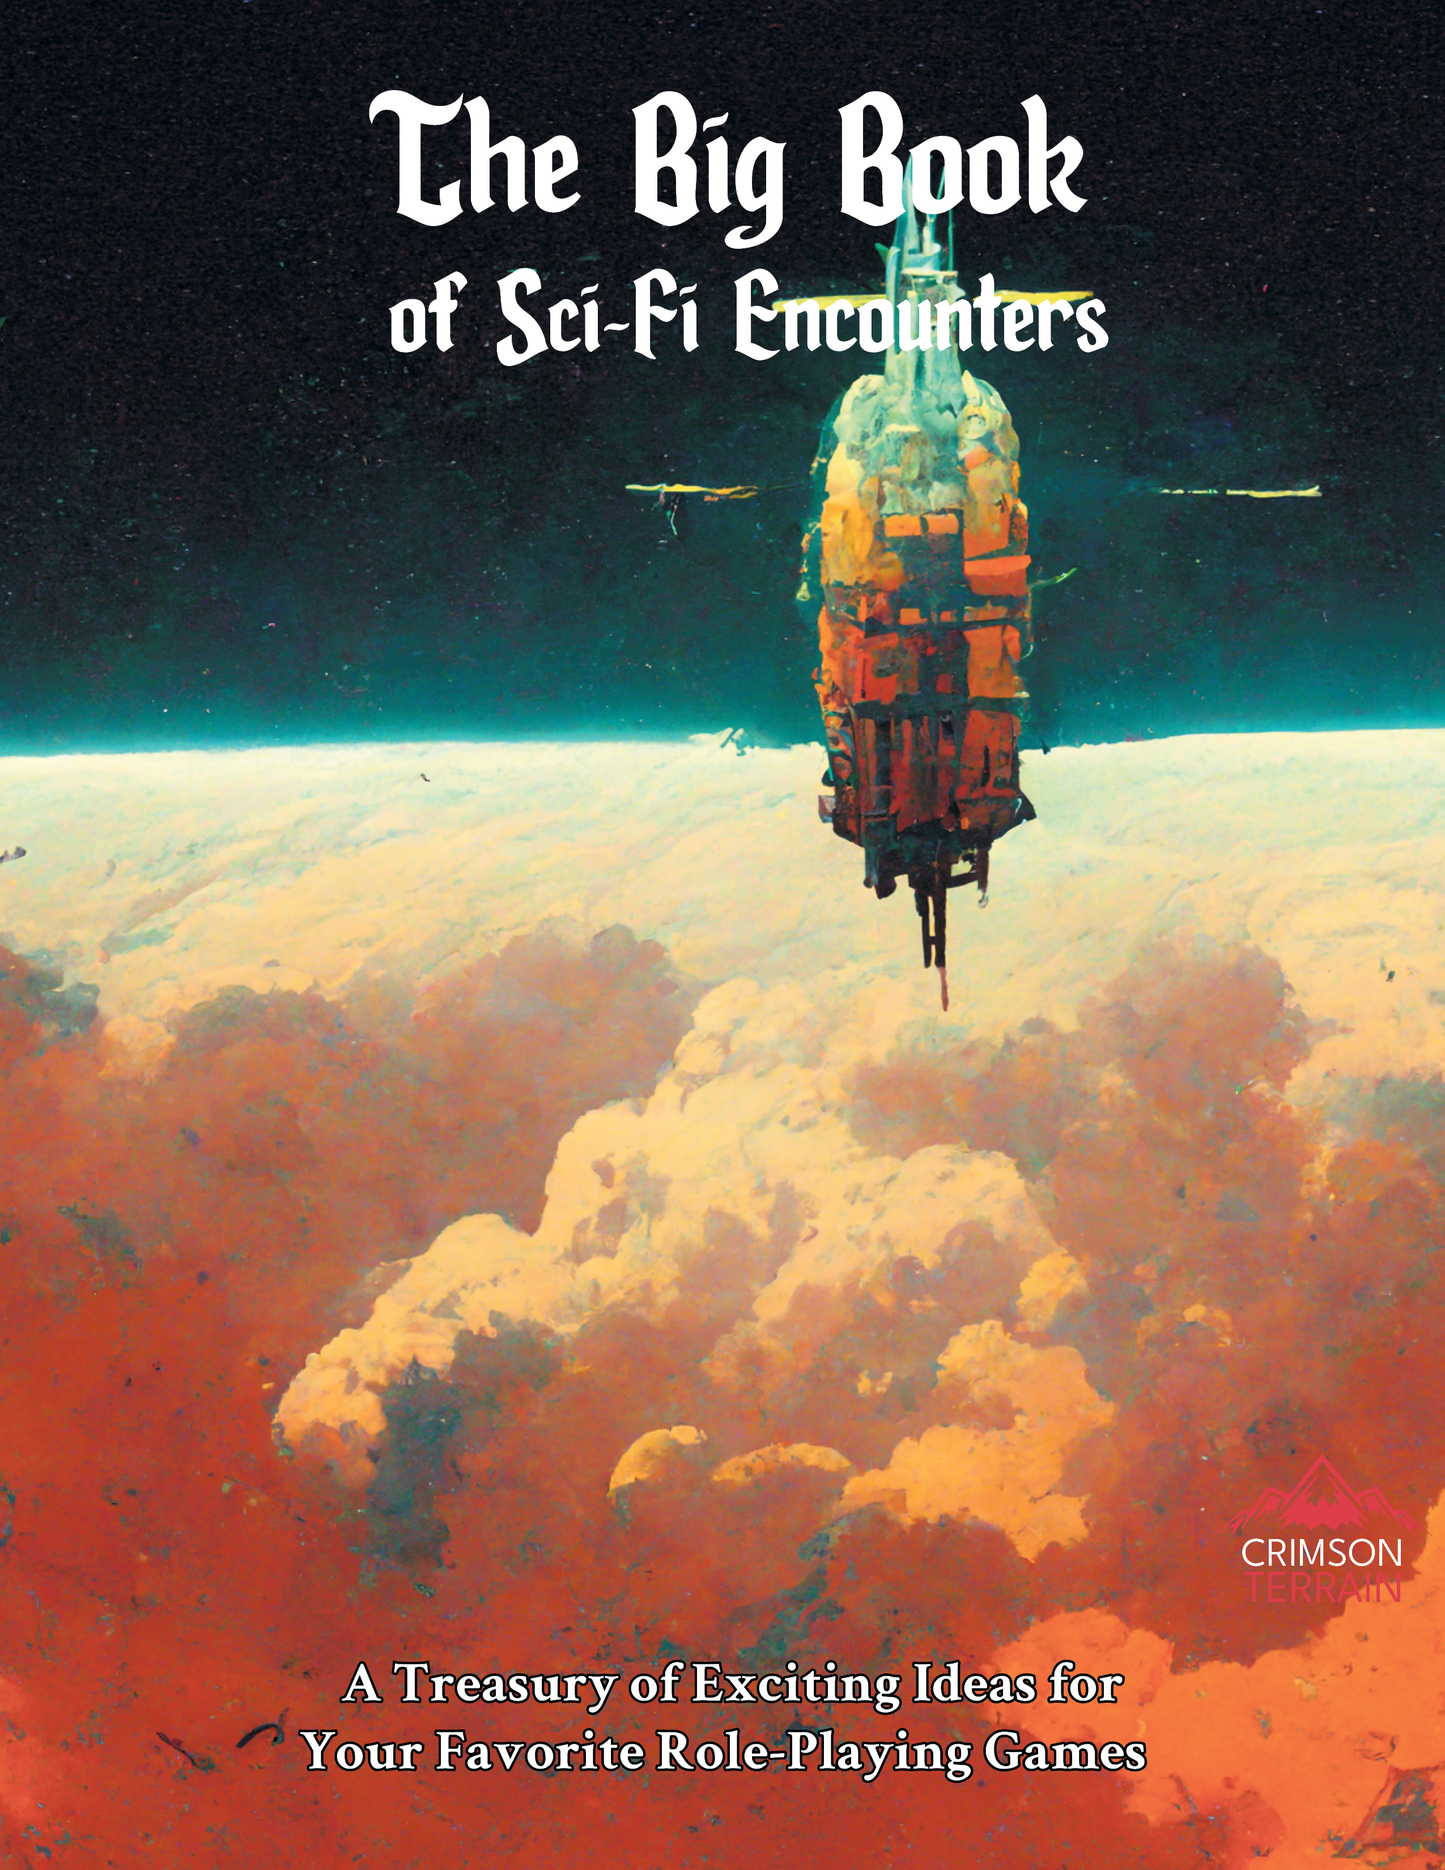 The Big Book of Sci-Fi Encounters